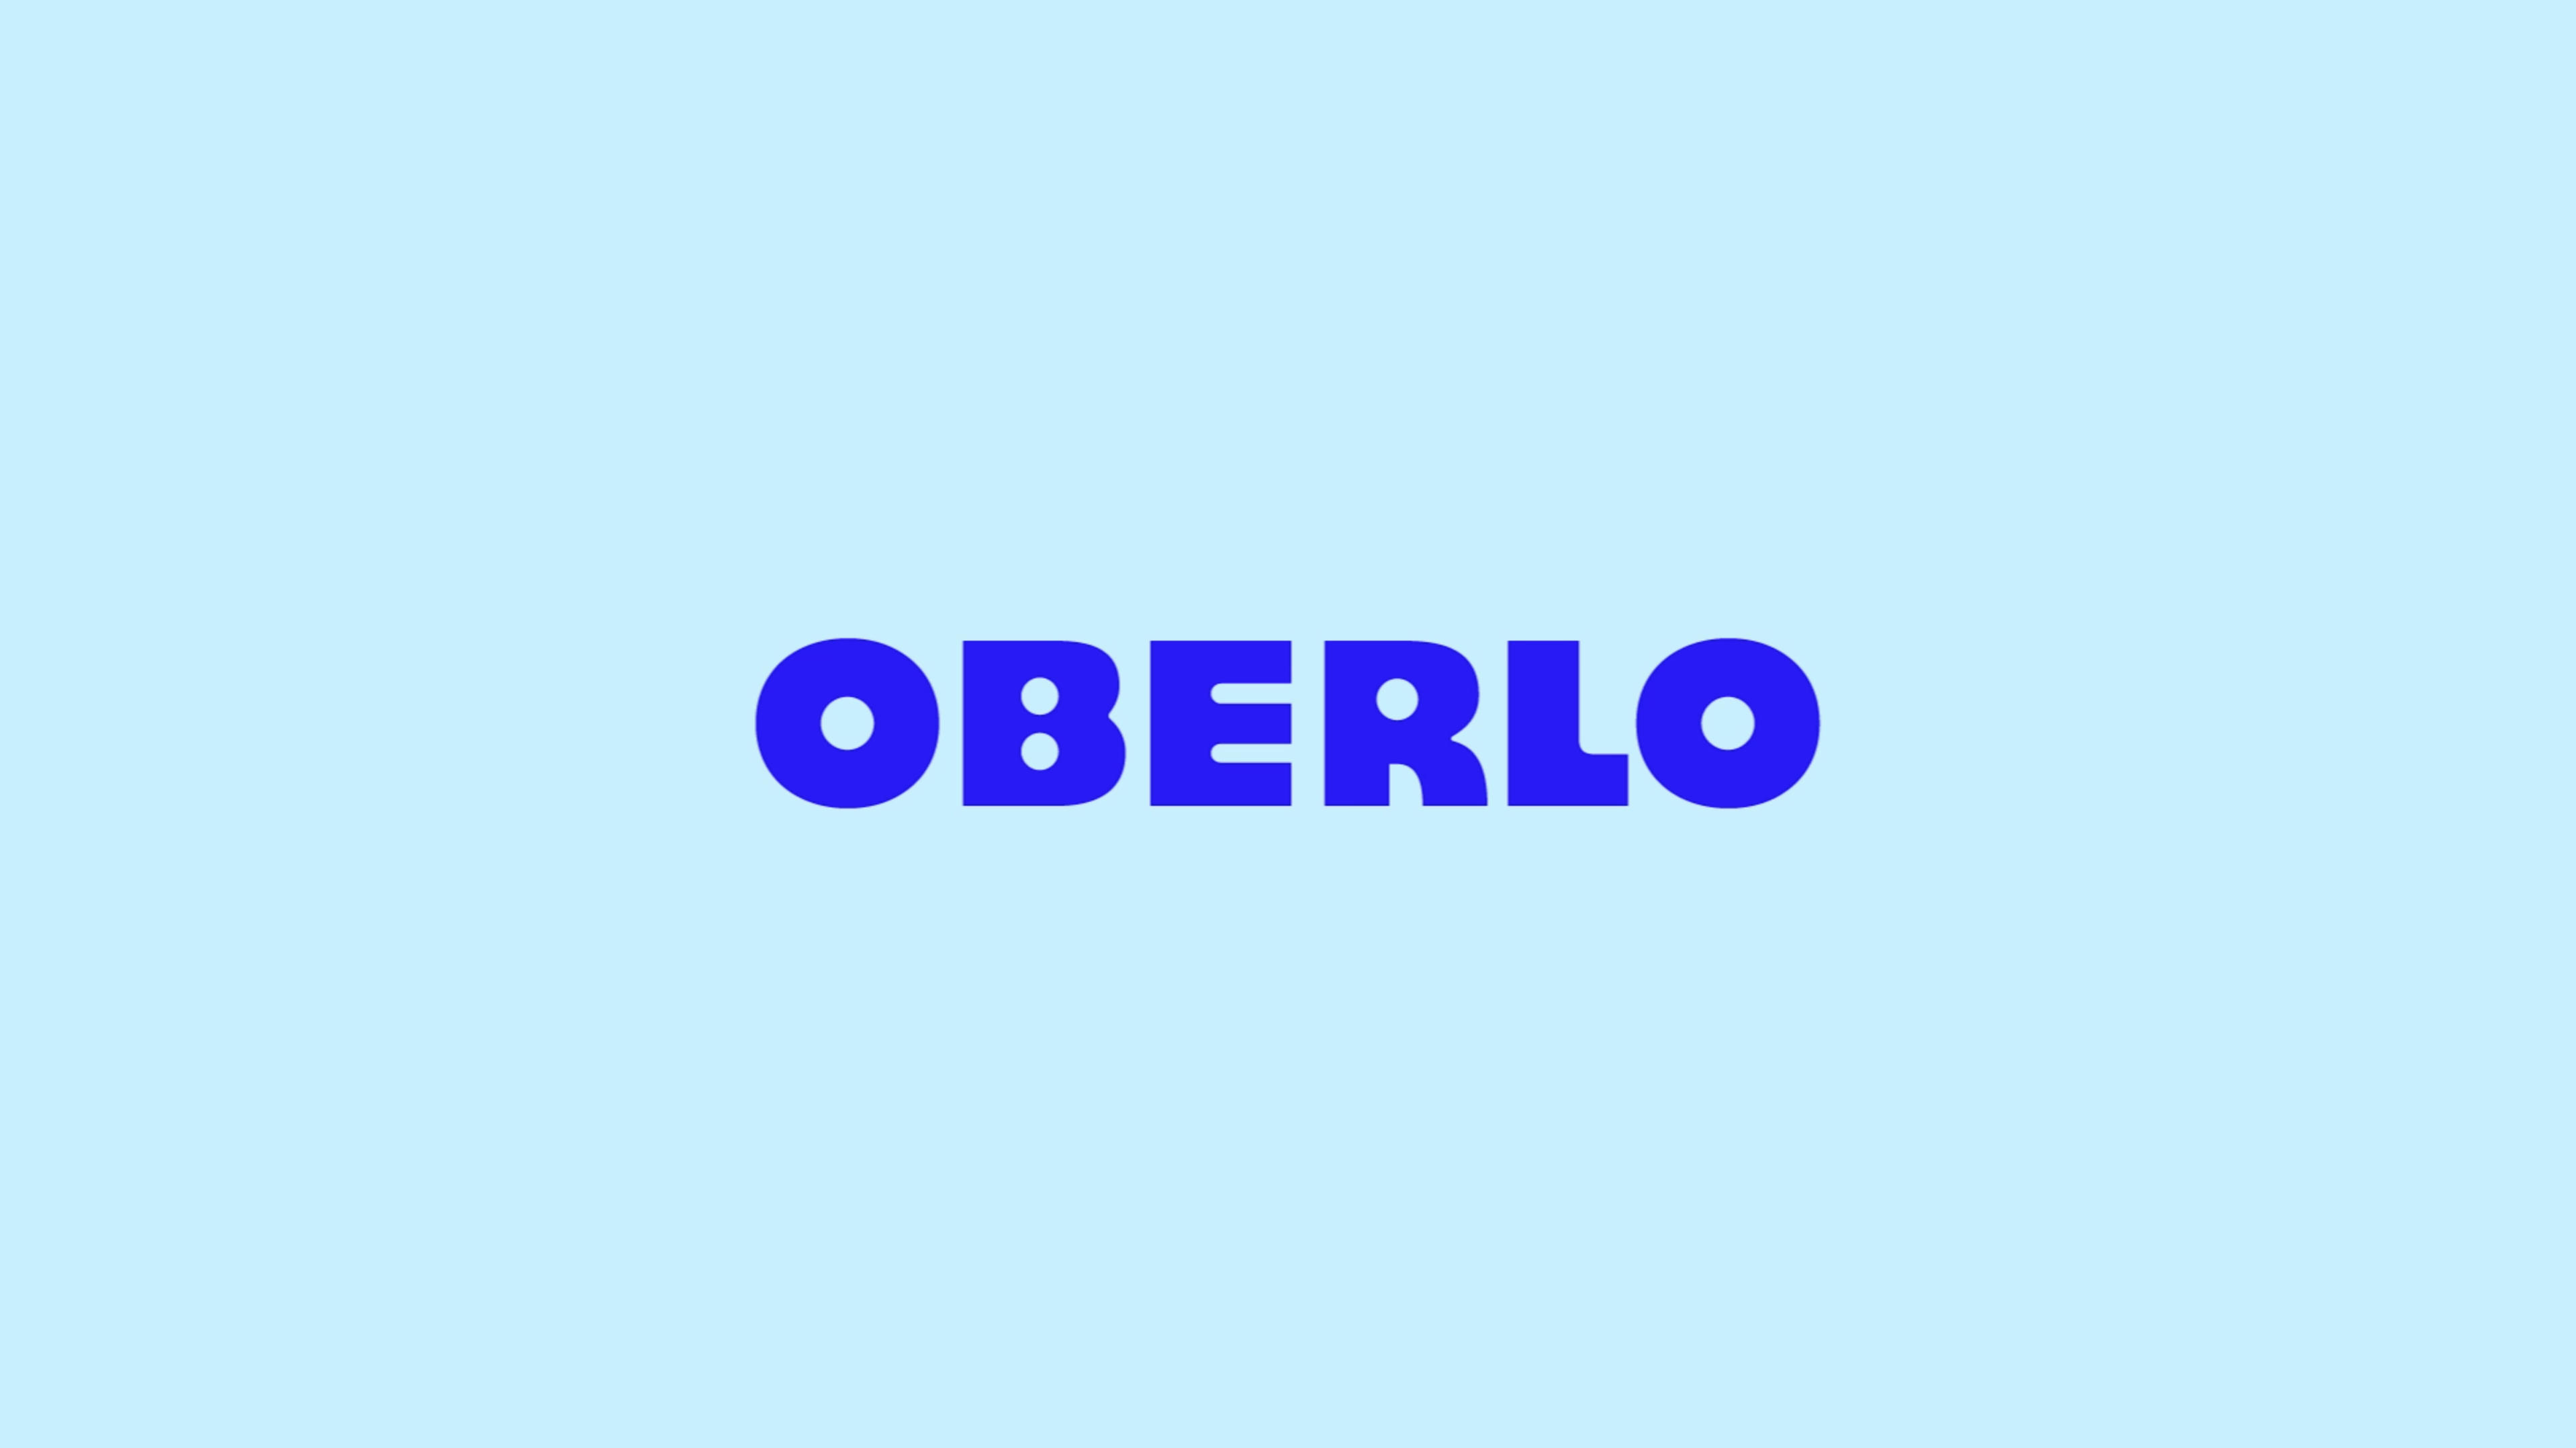 Oberlo Logo